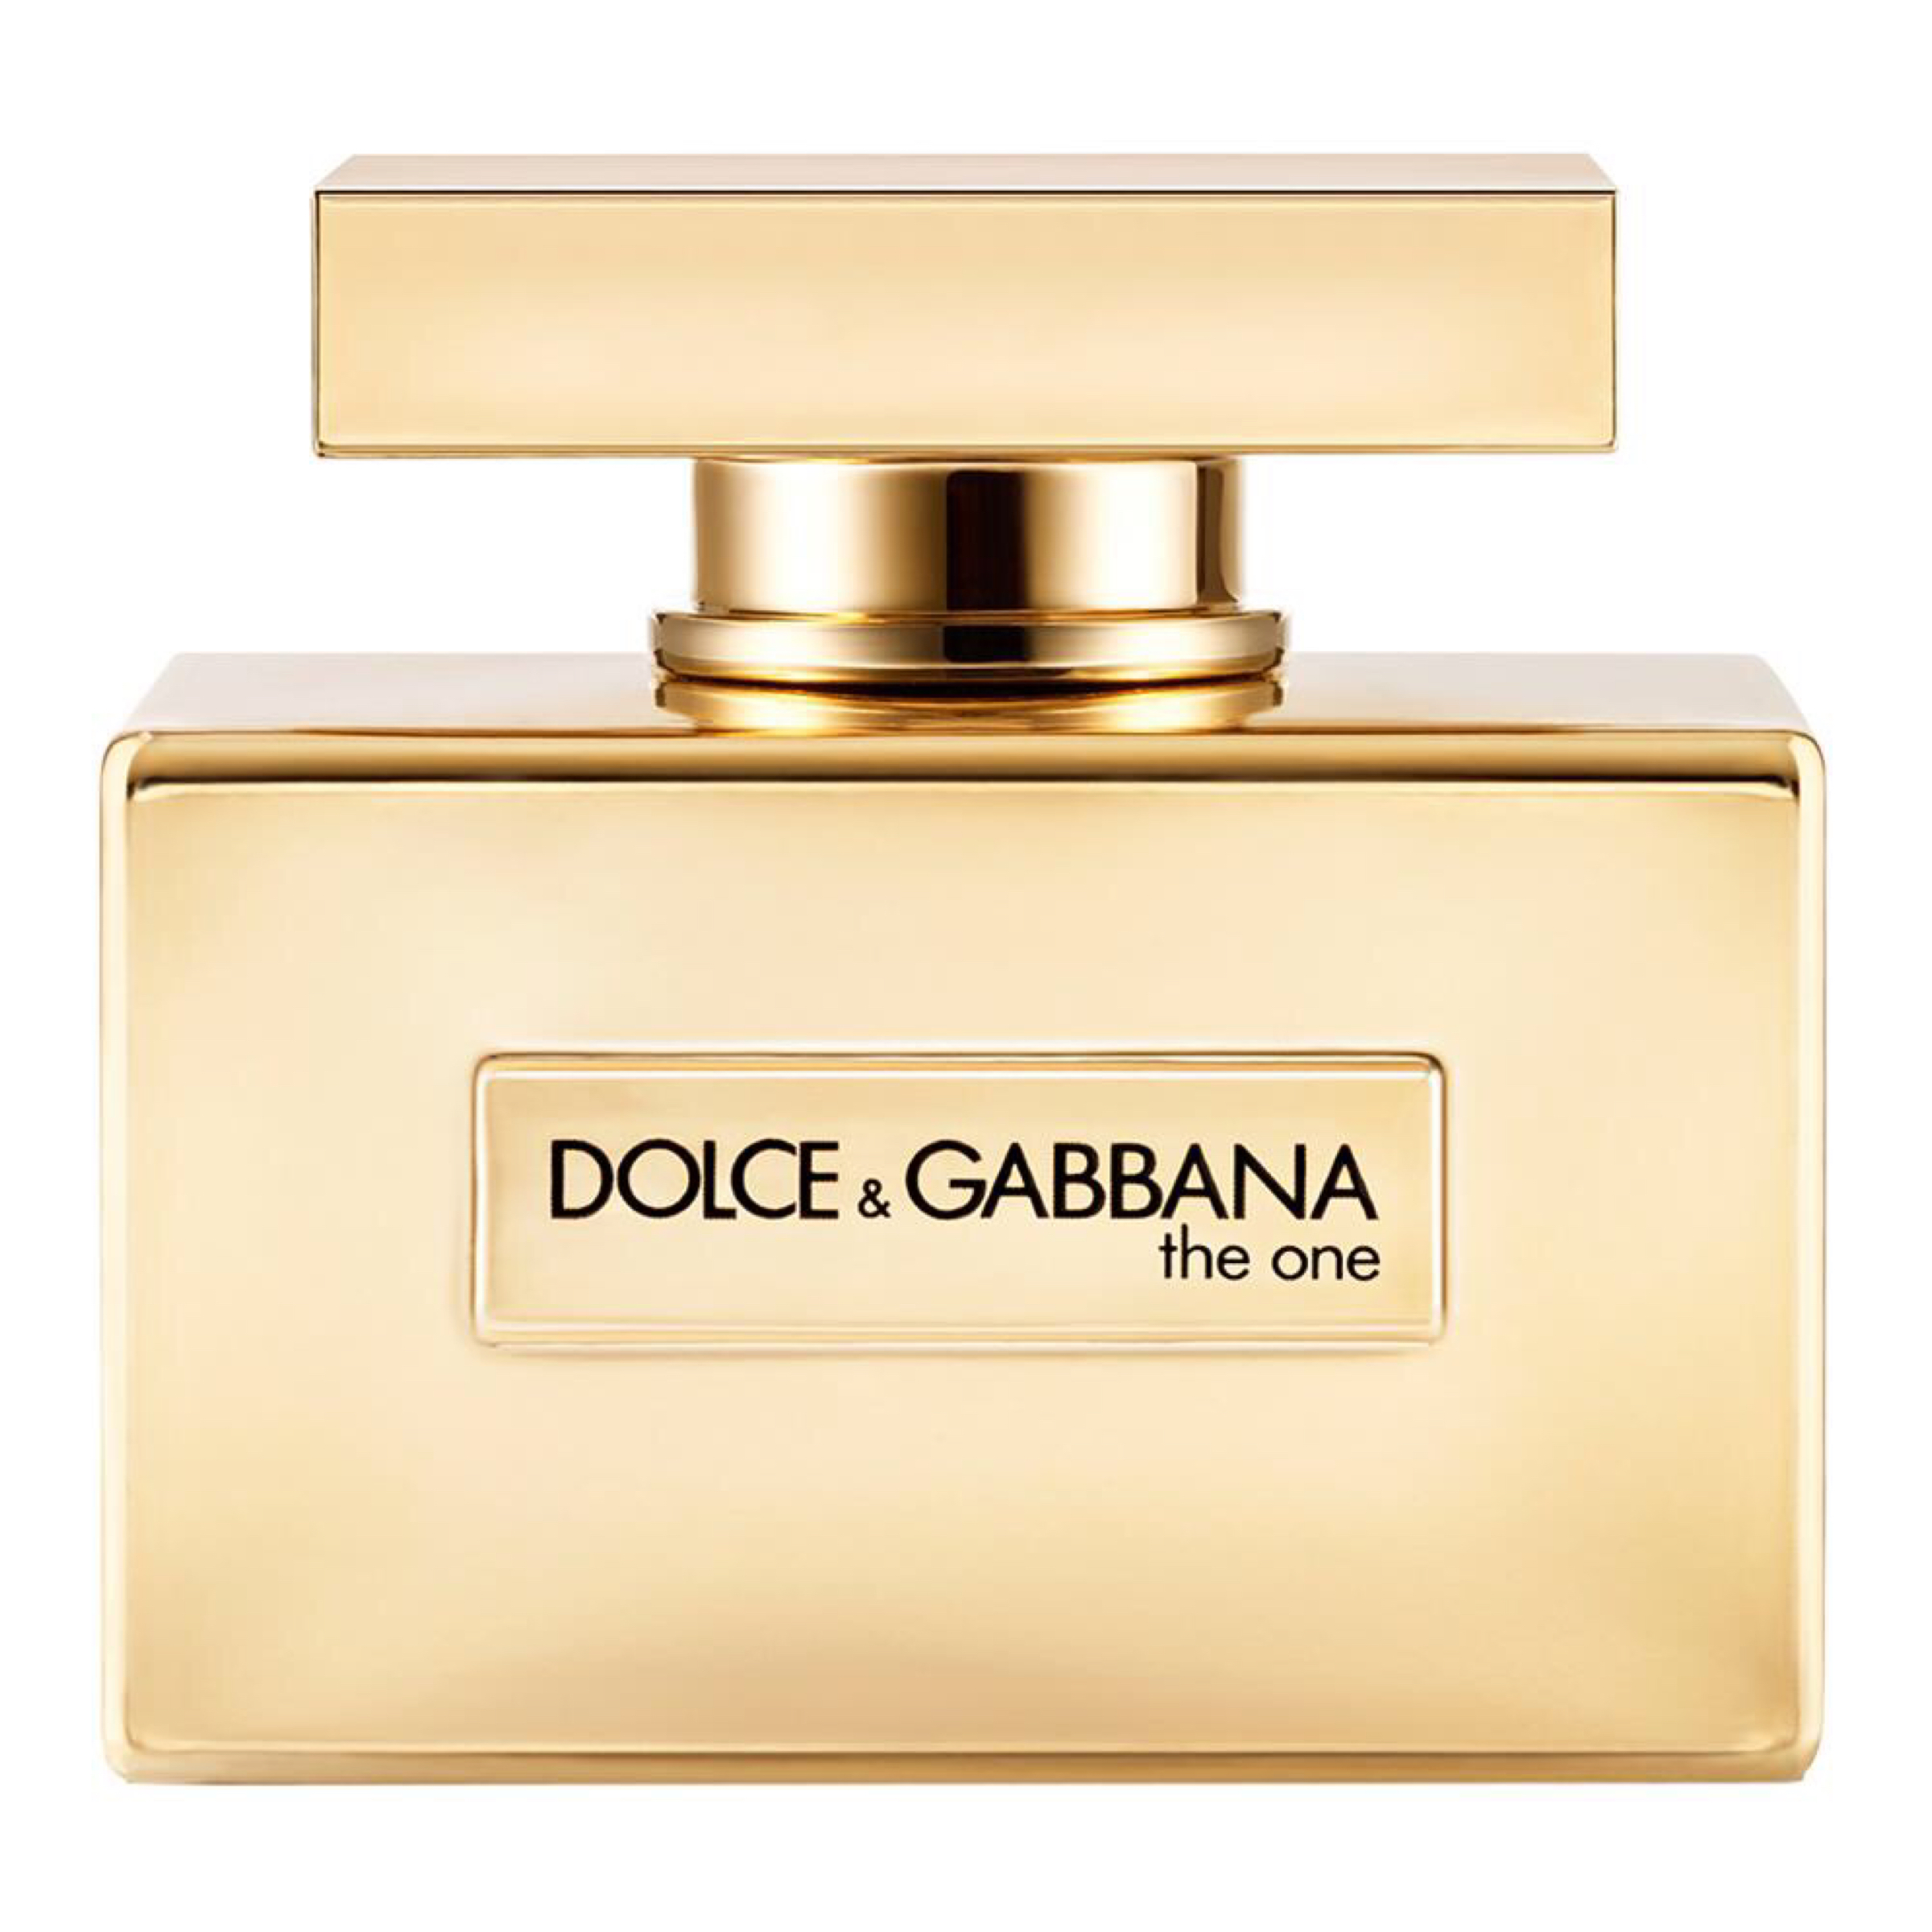 Аромат дольче габбана отзывы. Dolce Gabbana the one Gold intense. Dolce Gabbana the one Gold Limited Edition. Dolce Gabbana the one Gold intense женские. Дольче Габбана the one Gold intense.